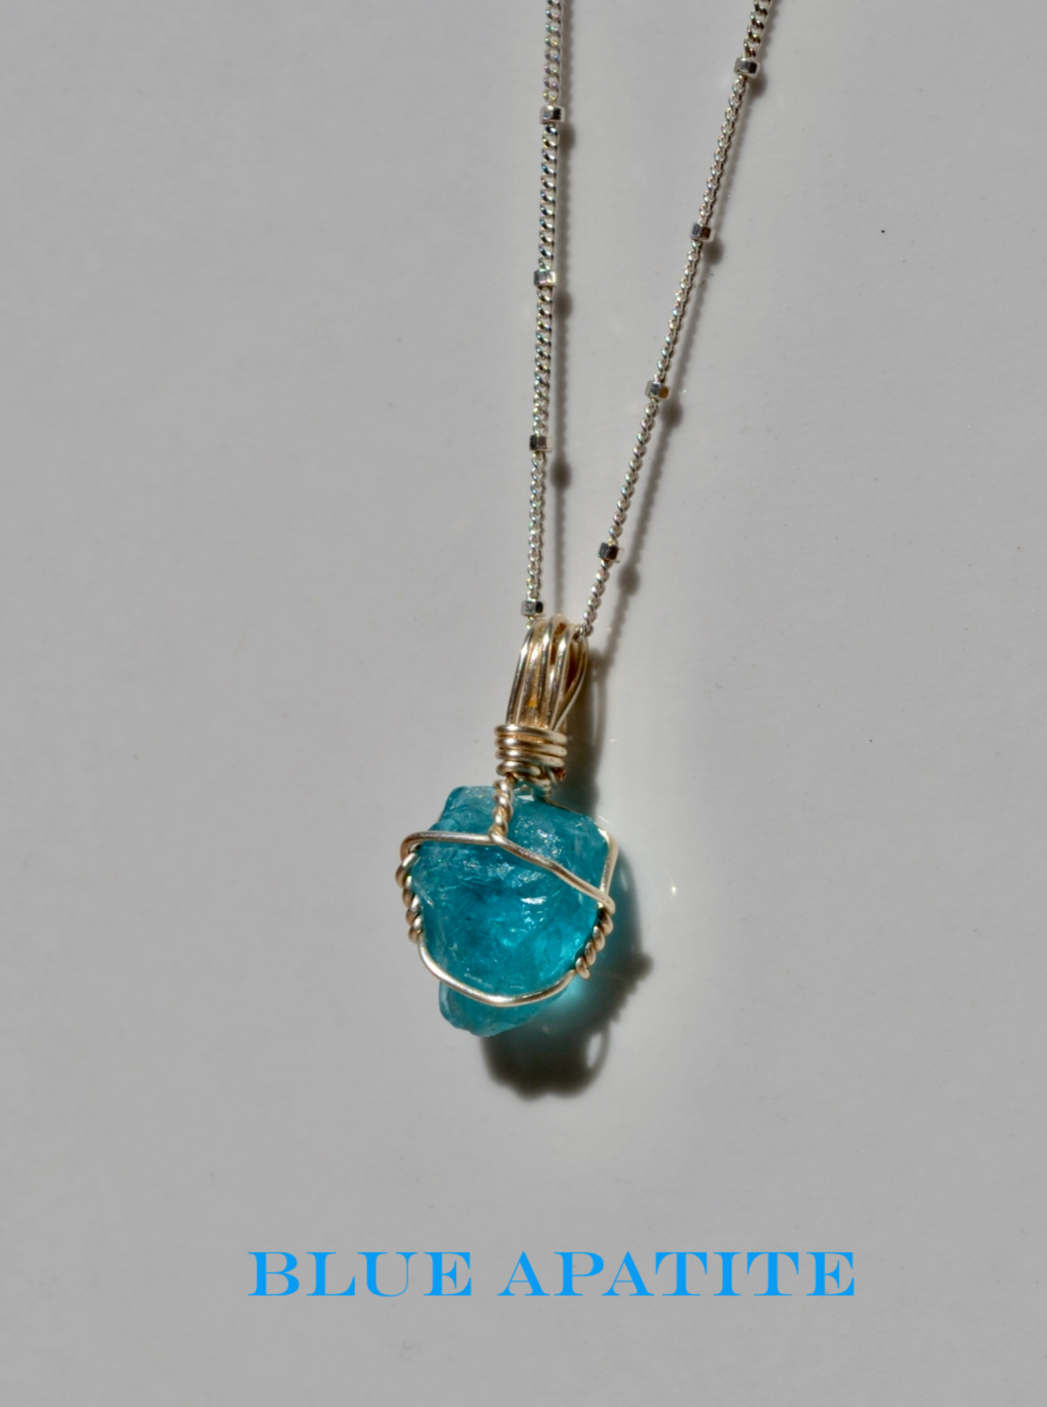 Water Goddess Crystal Necklace Set